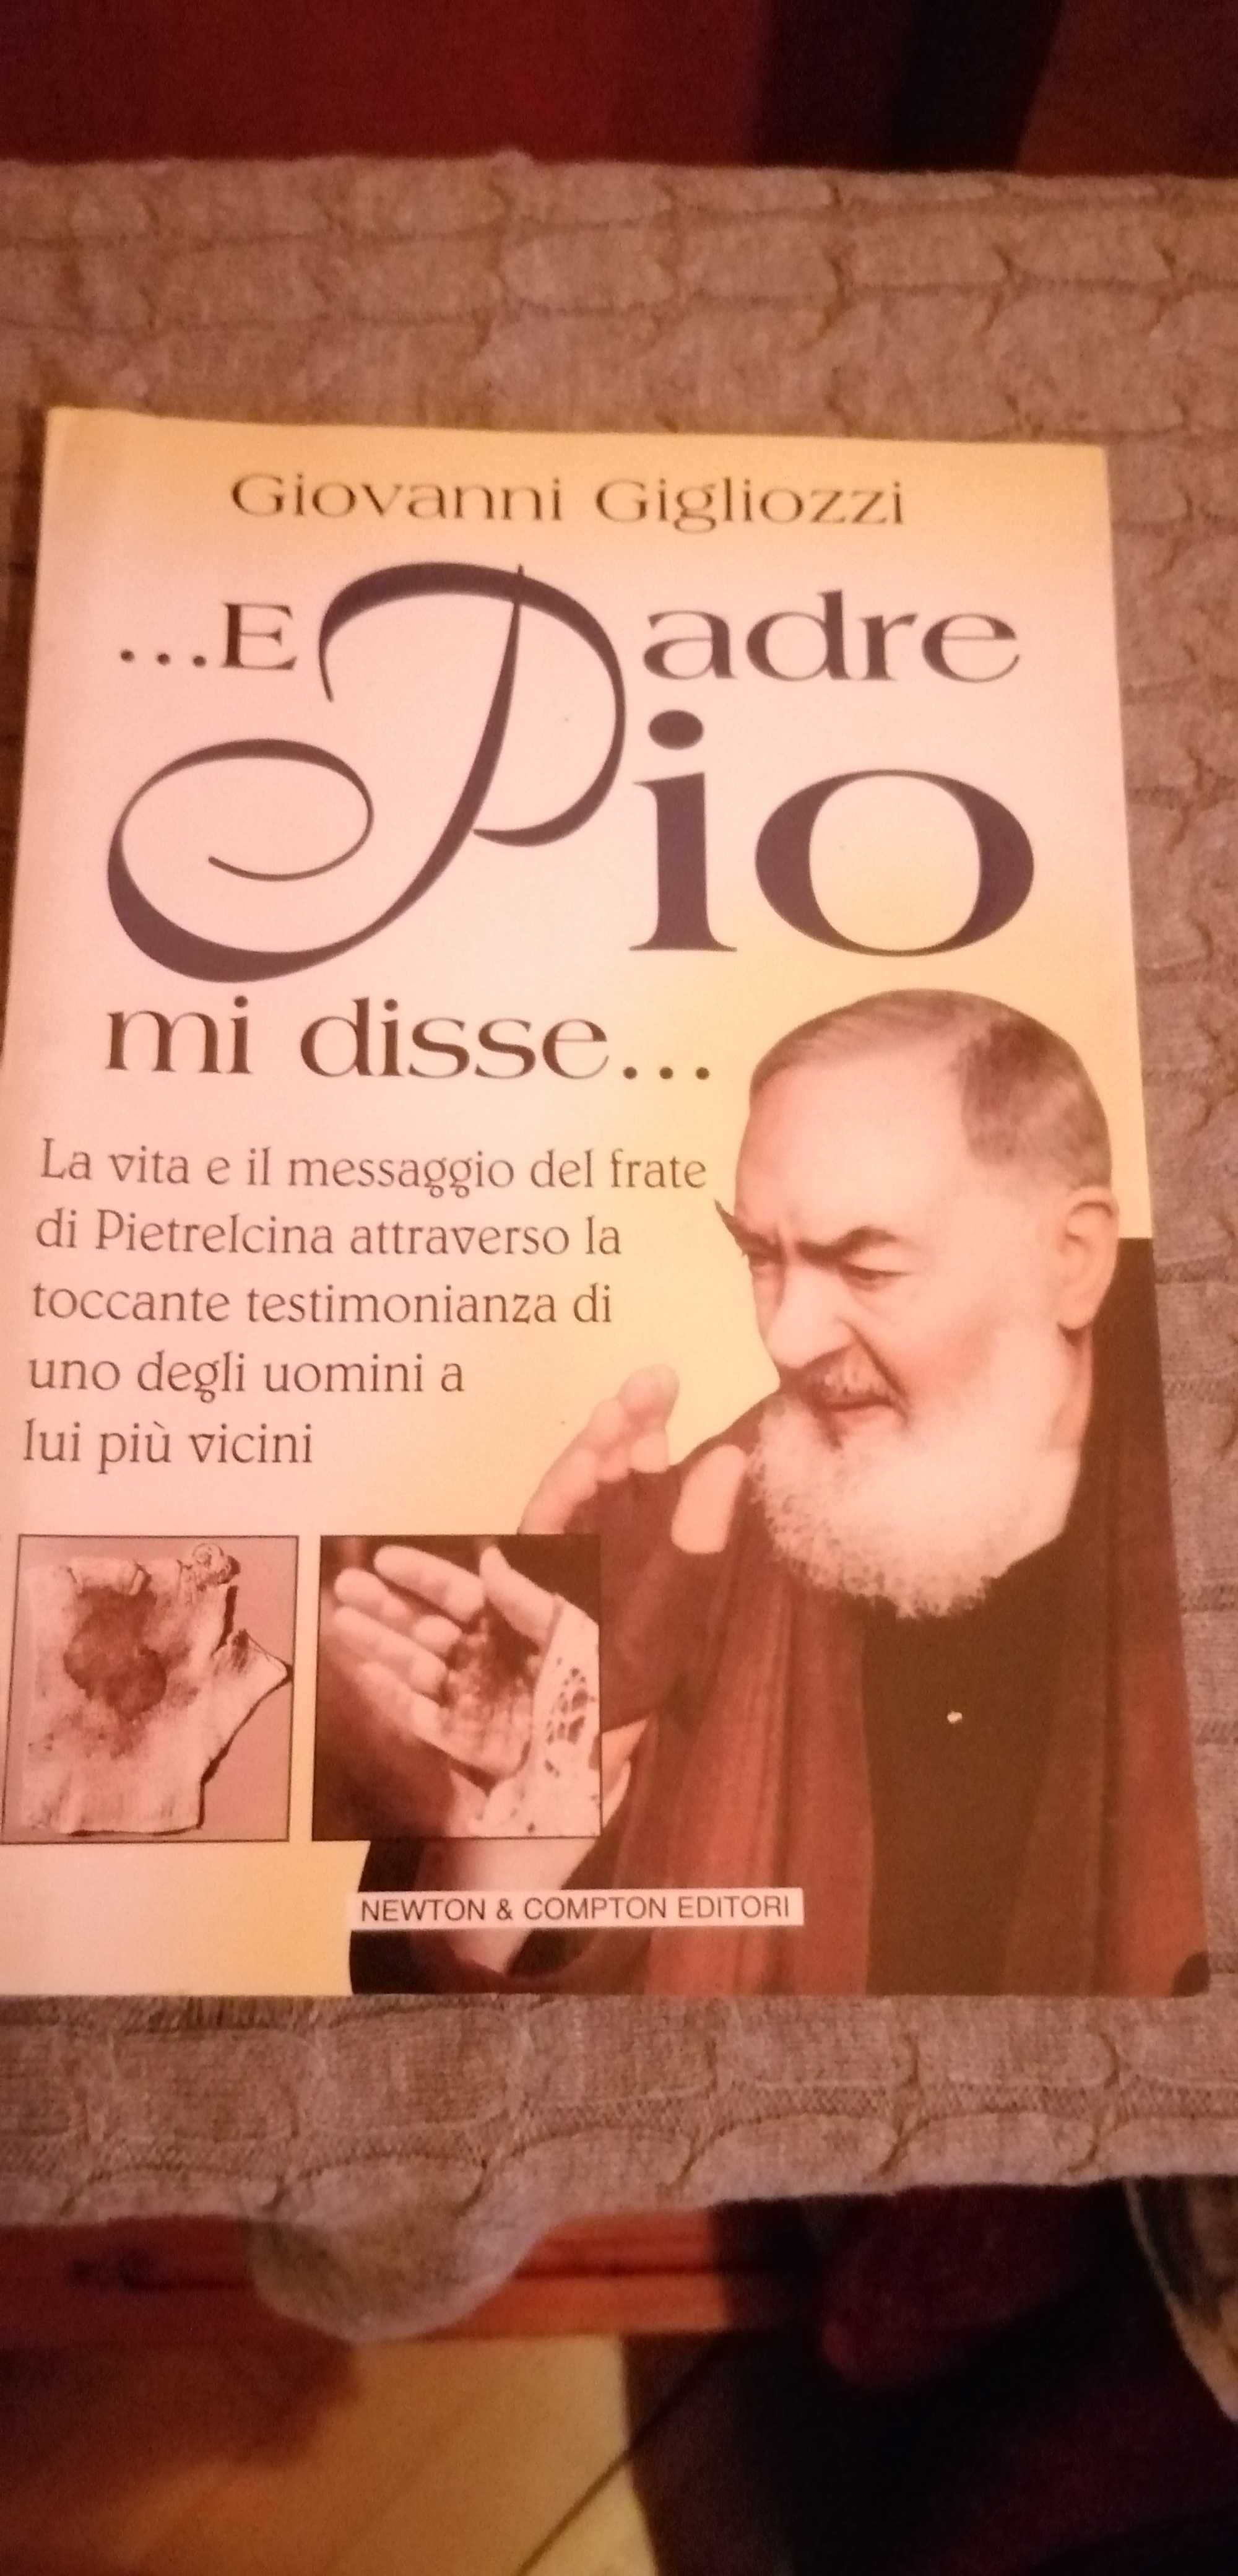 ... e Padre Pio mi disse... Książka o Ojcu Pio, po włosku